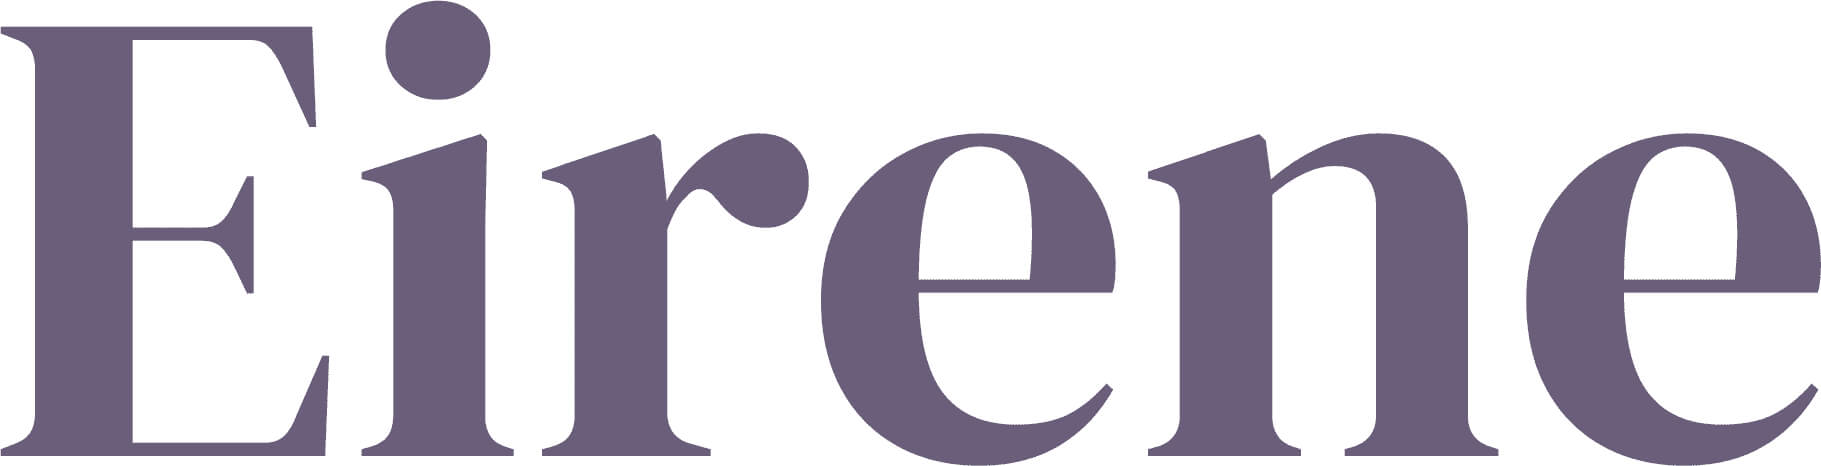 eirene logo